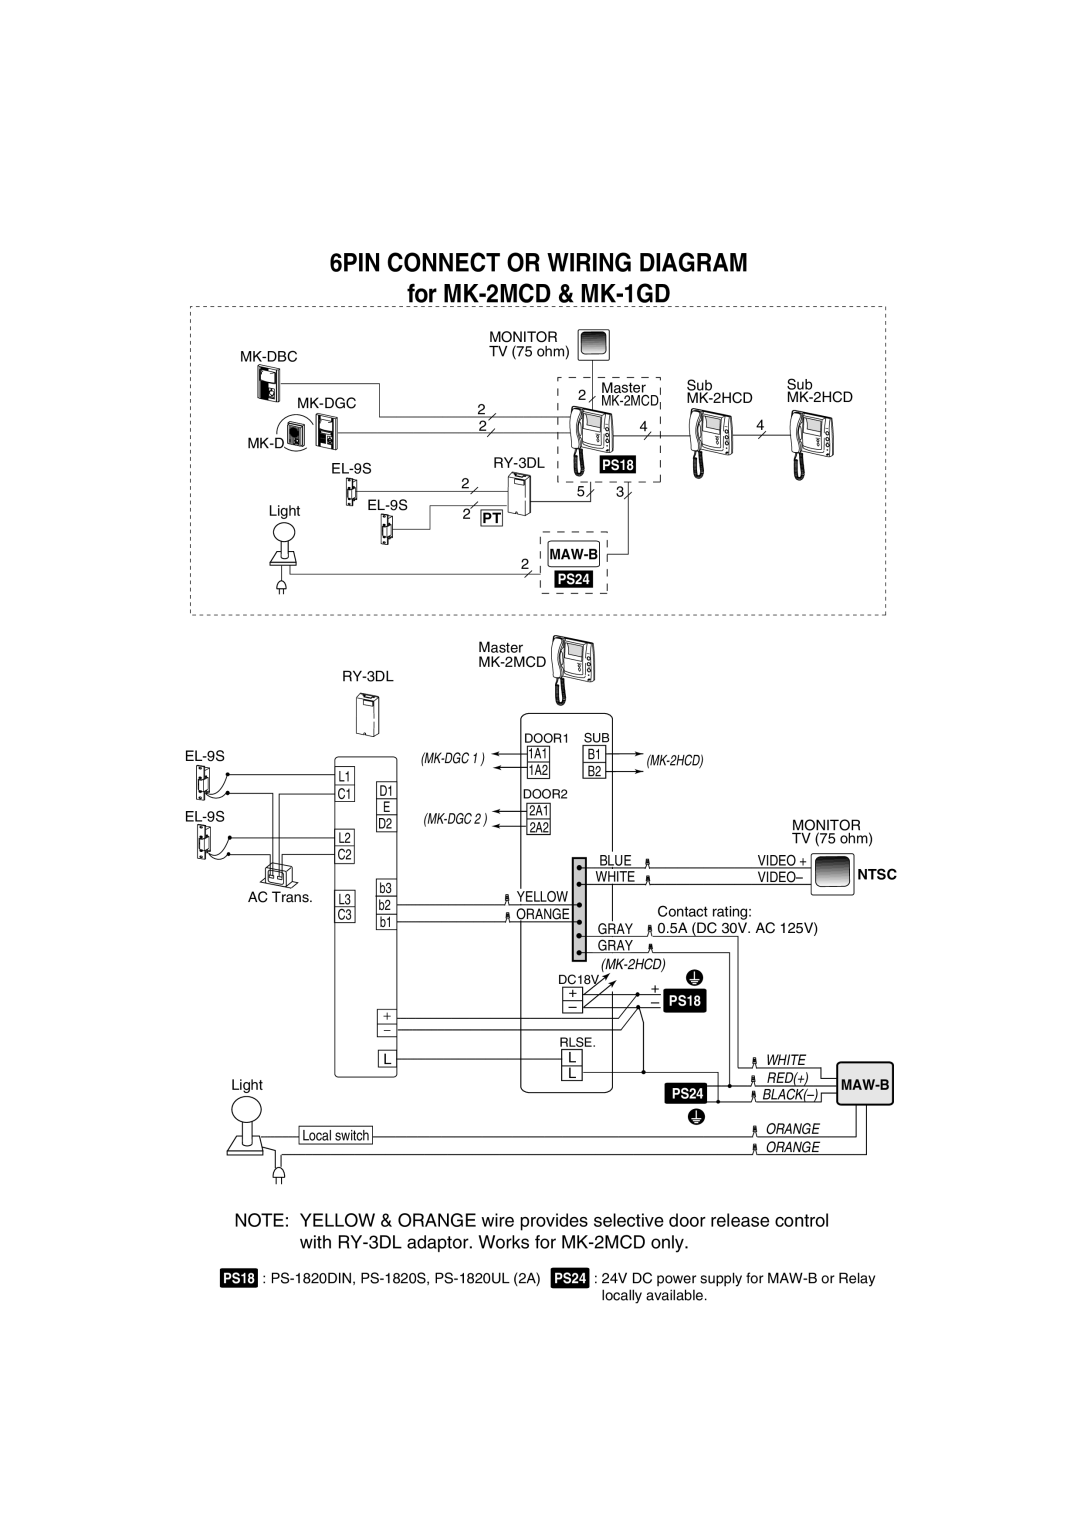 Aiphone Mk-2mcd, MK-2HCD manual 6PIN CONNECT OR WIRING DIAGRAM, for MK-2MCD& MK-1GD, PS18, 2PT 2MAW-B, PS24, Ntsc 